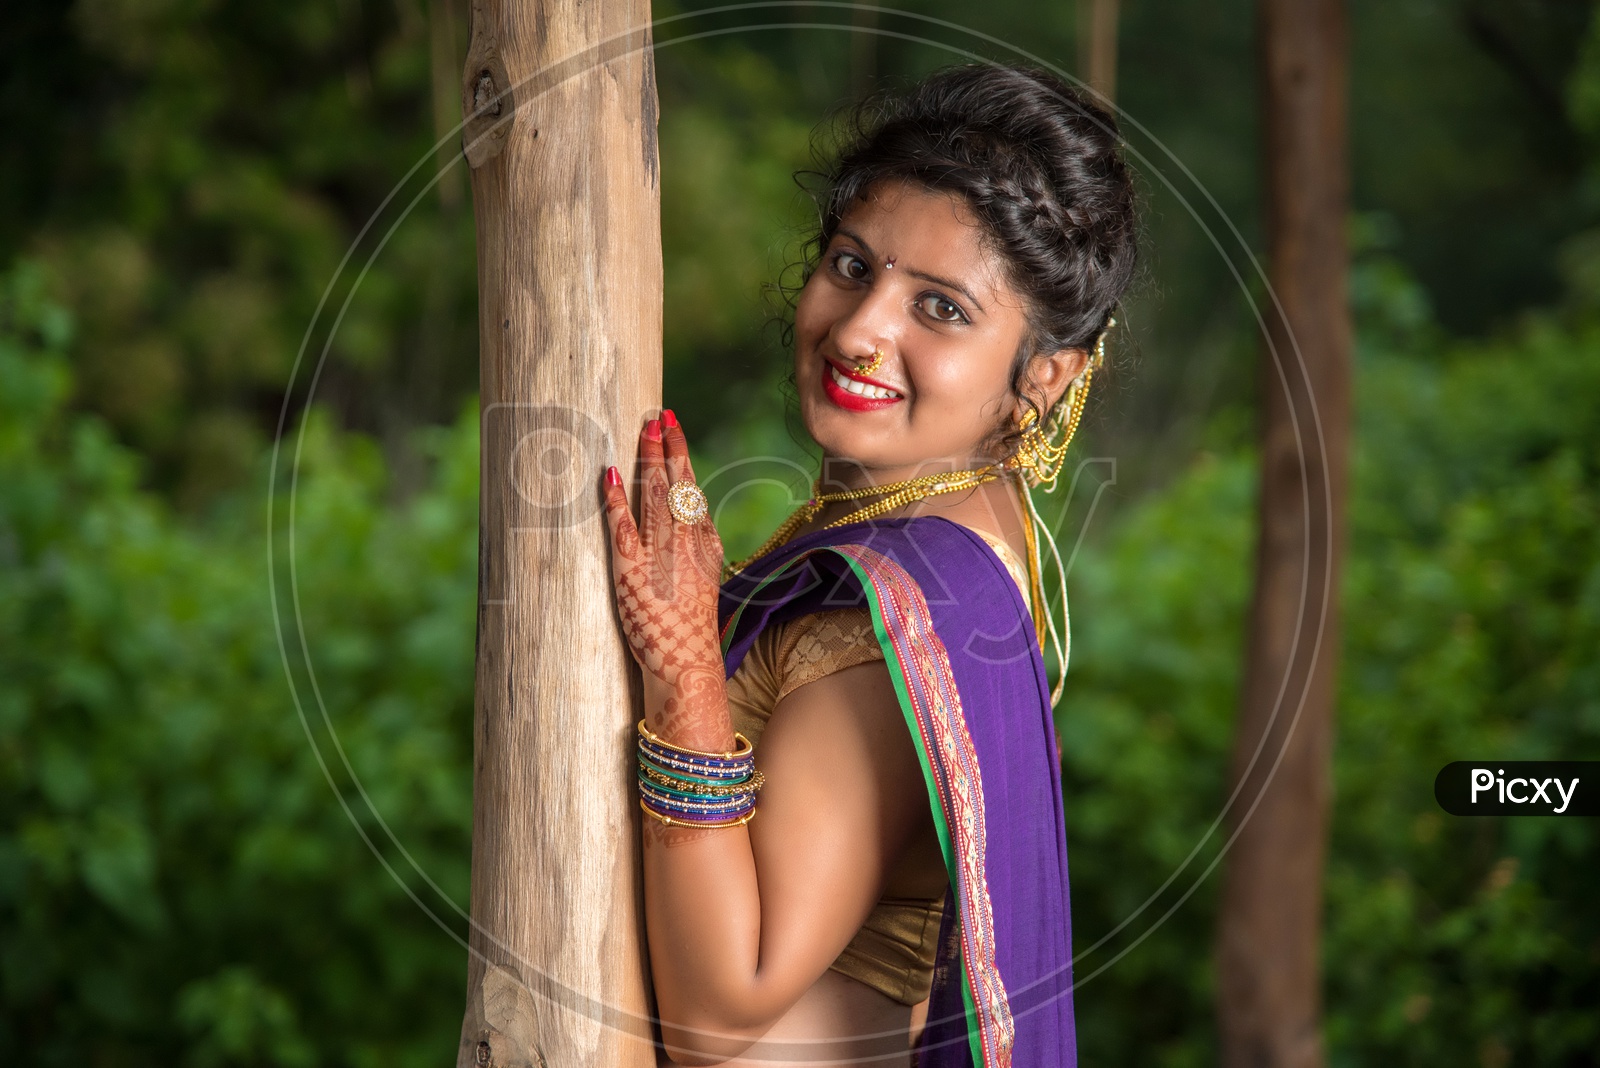 15 Top Saree Poses for Photos, Selfie & Social Media [2023]